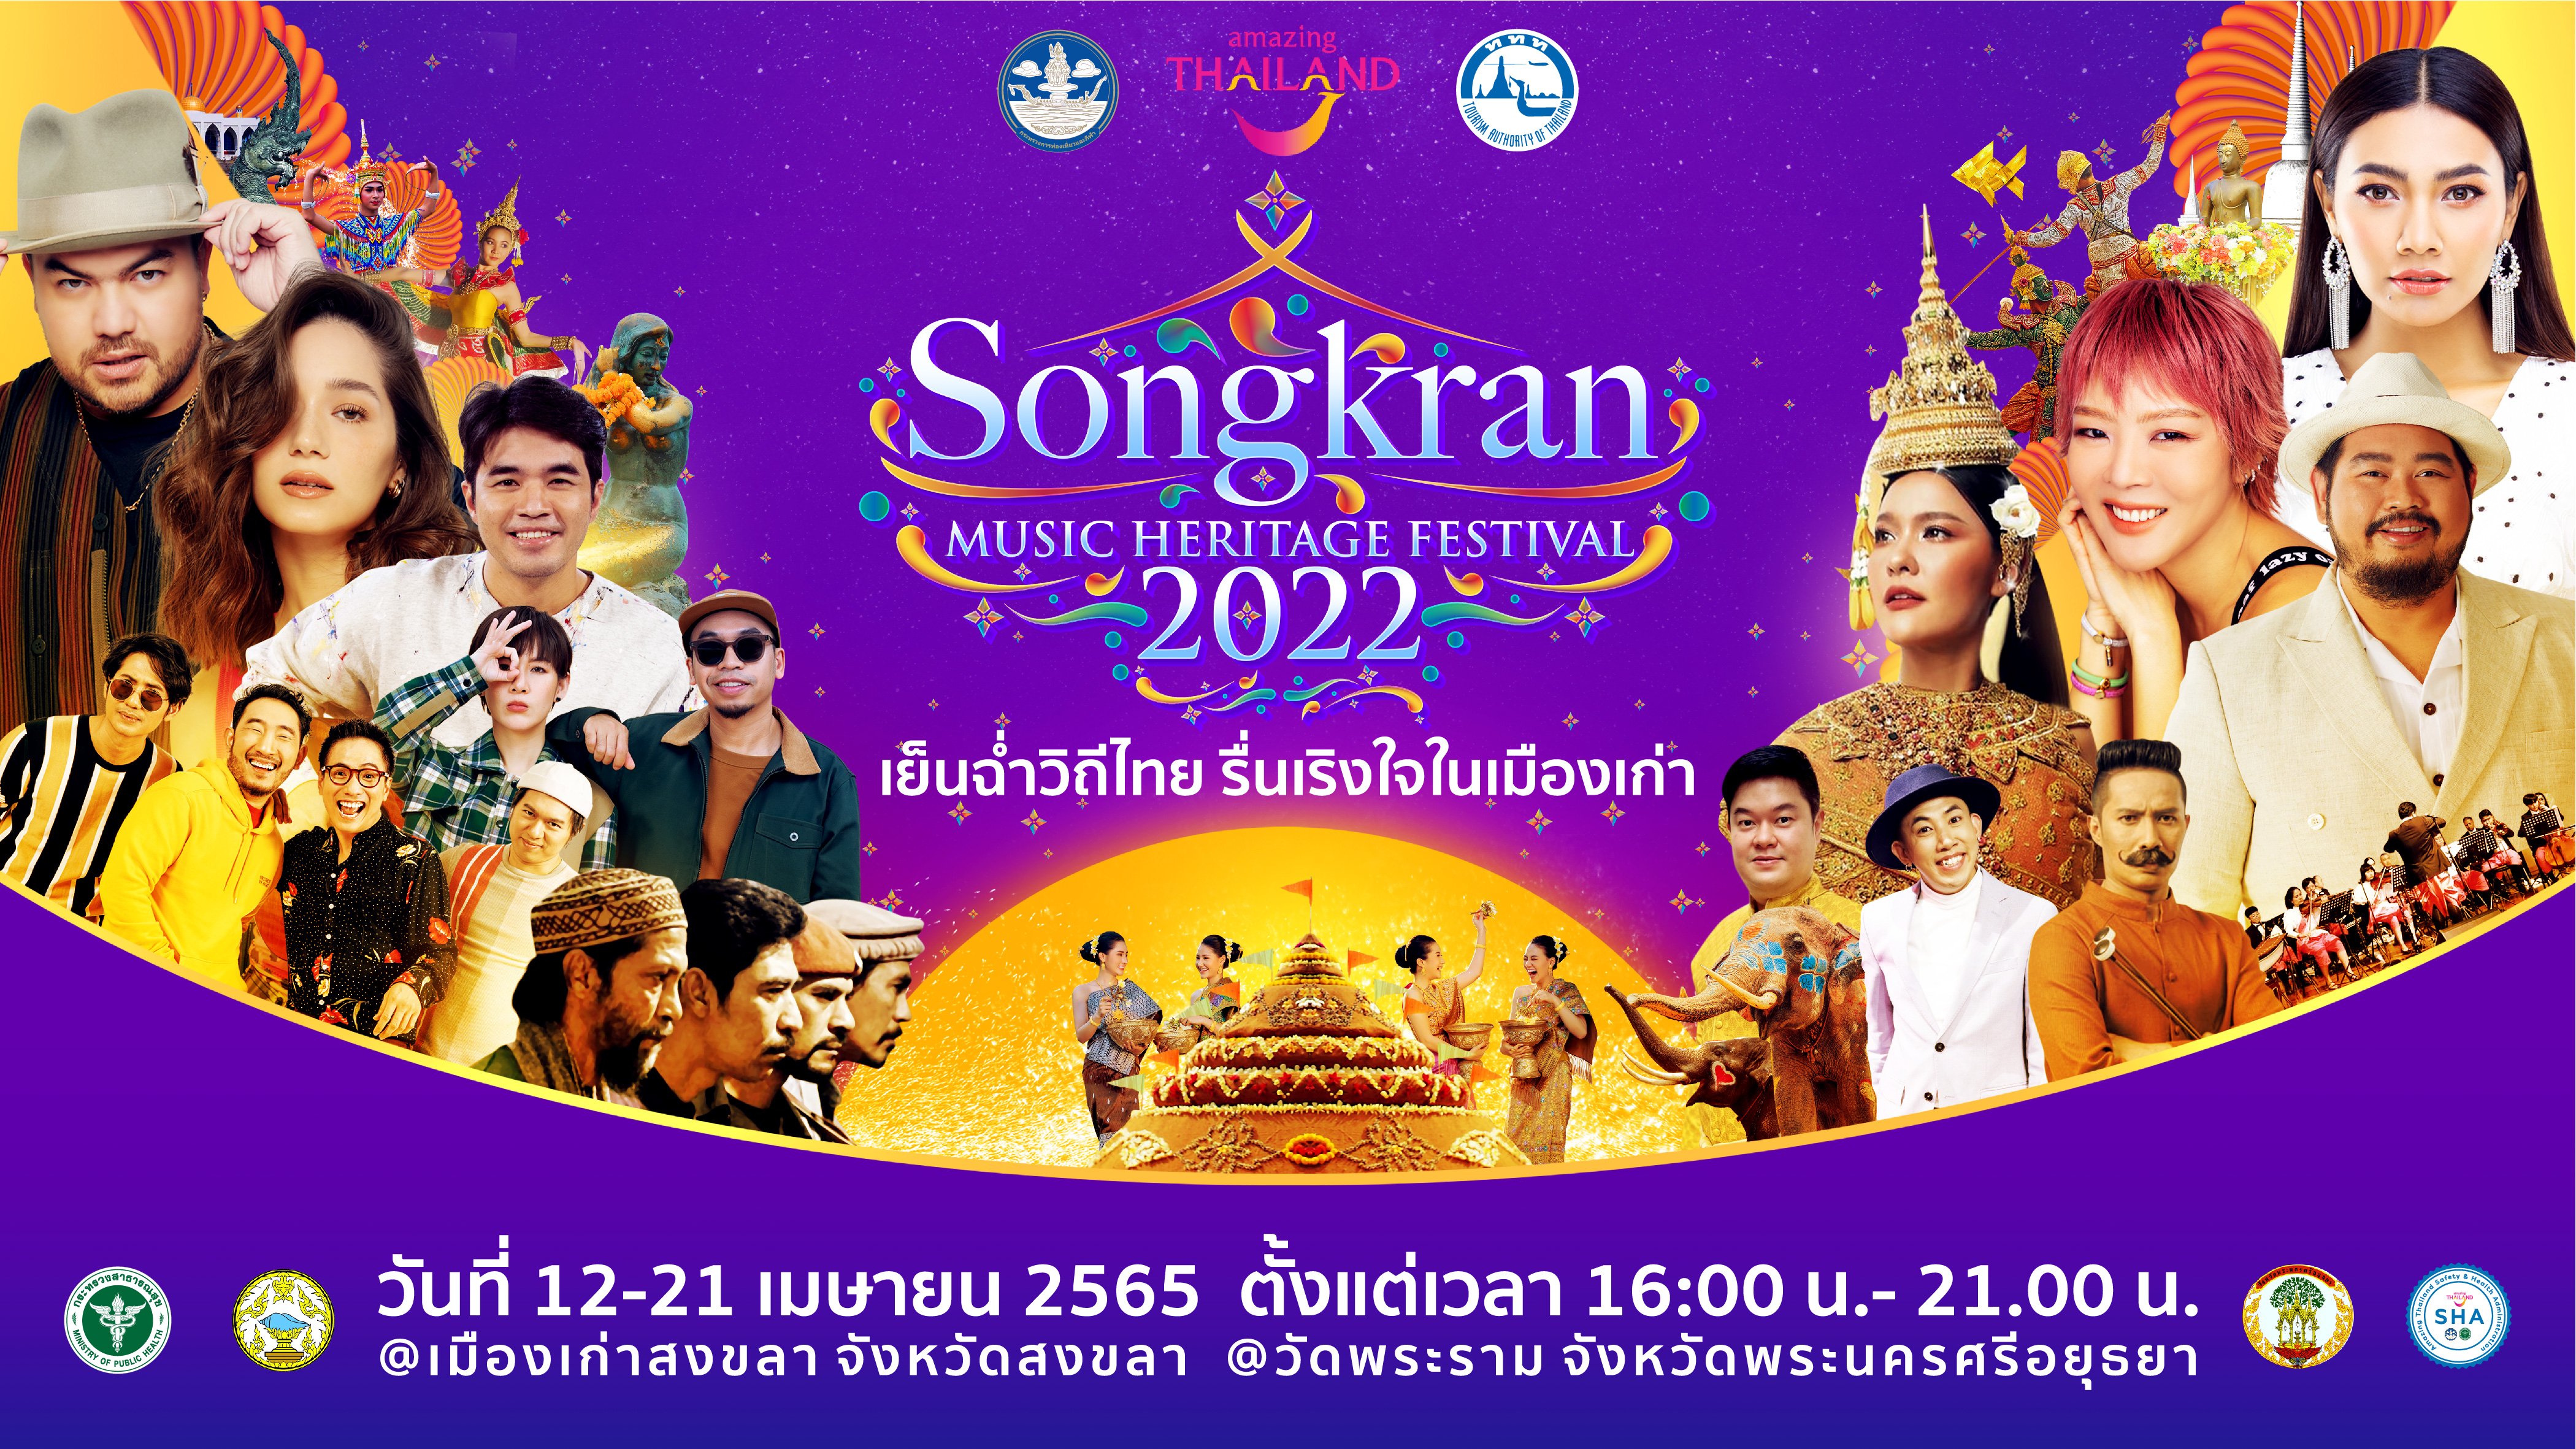 Songkran Music Heritage Festival 2022